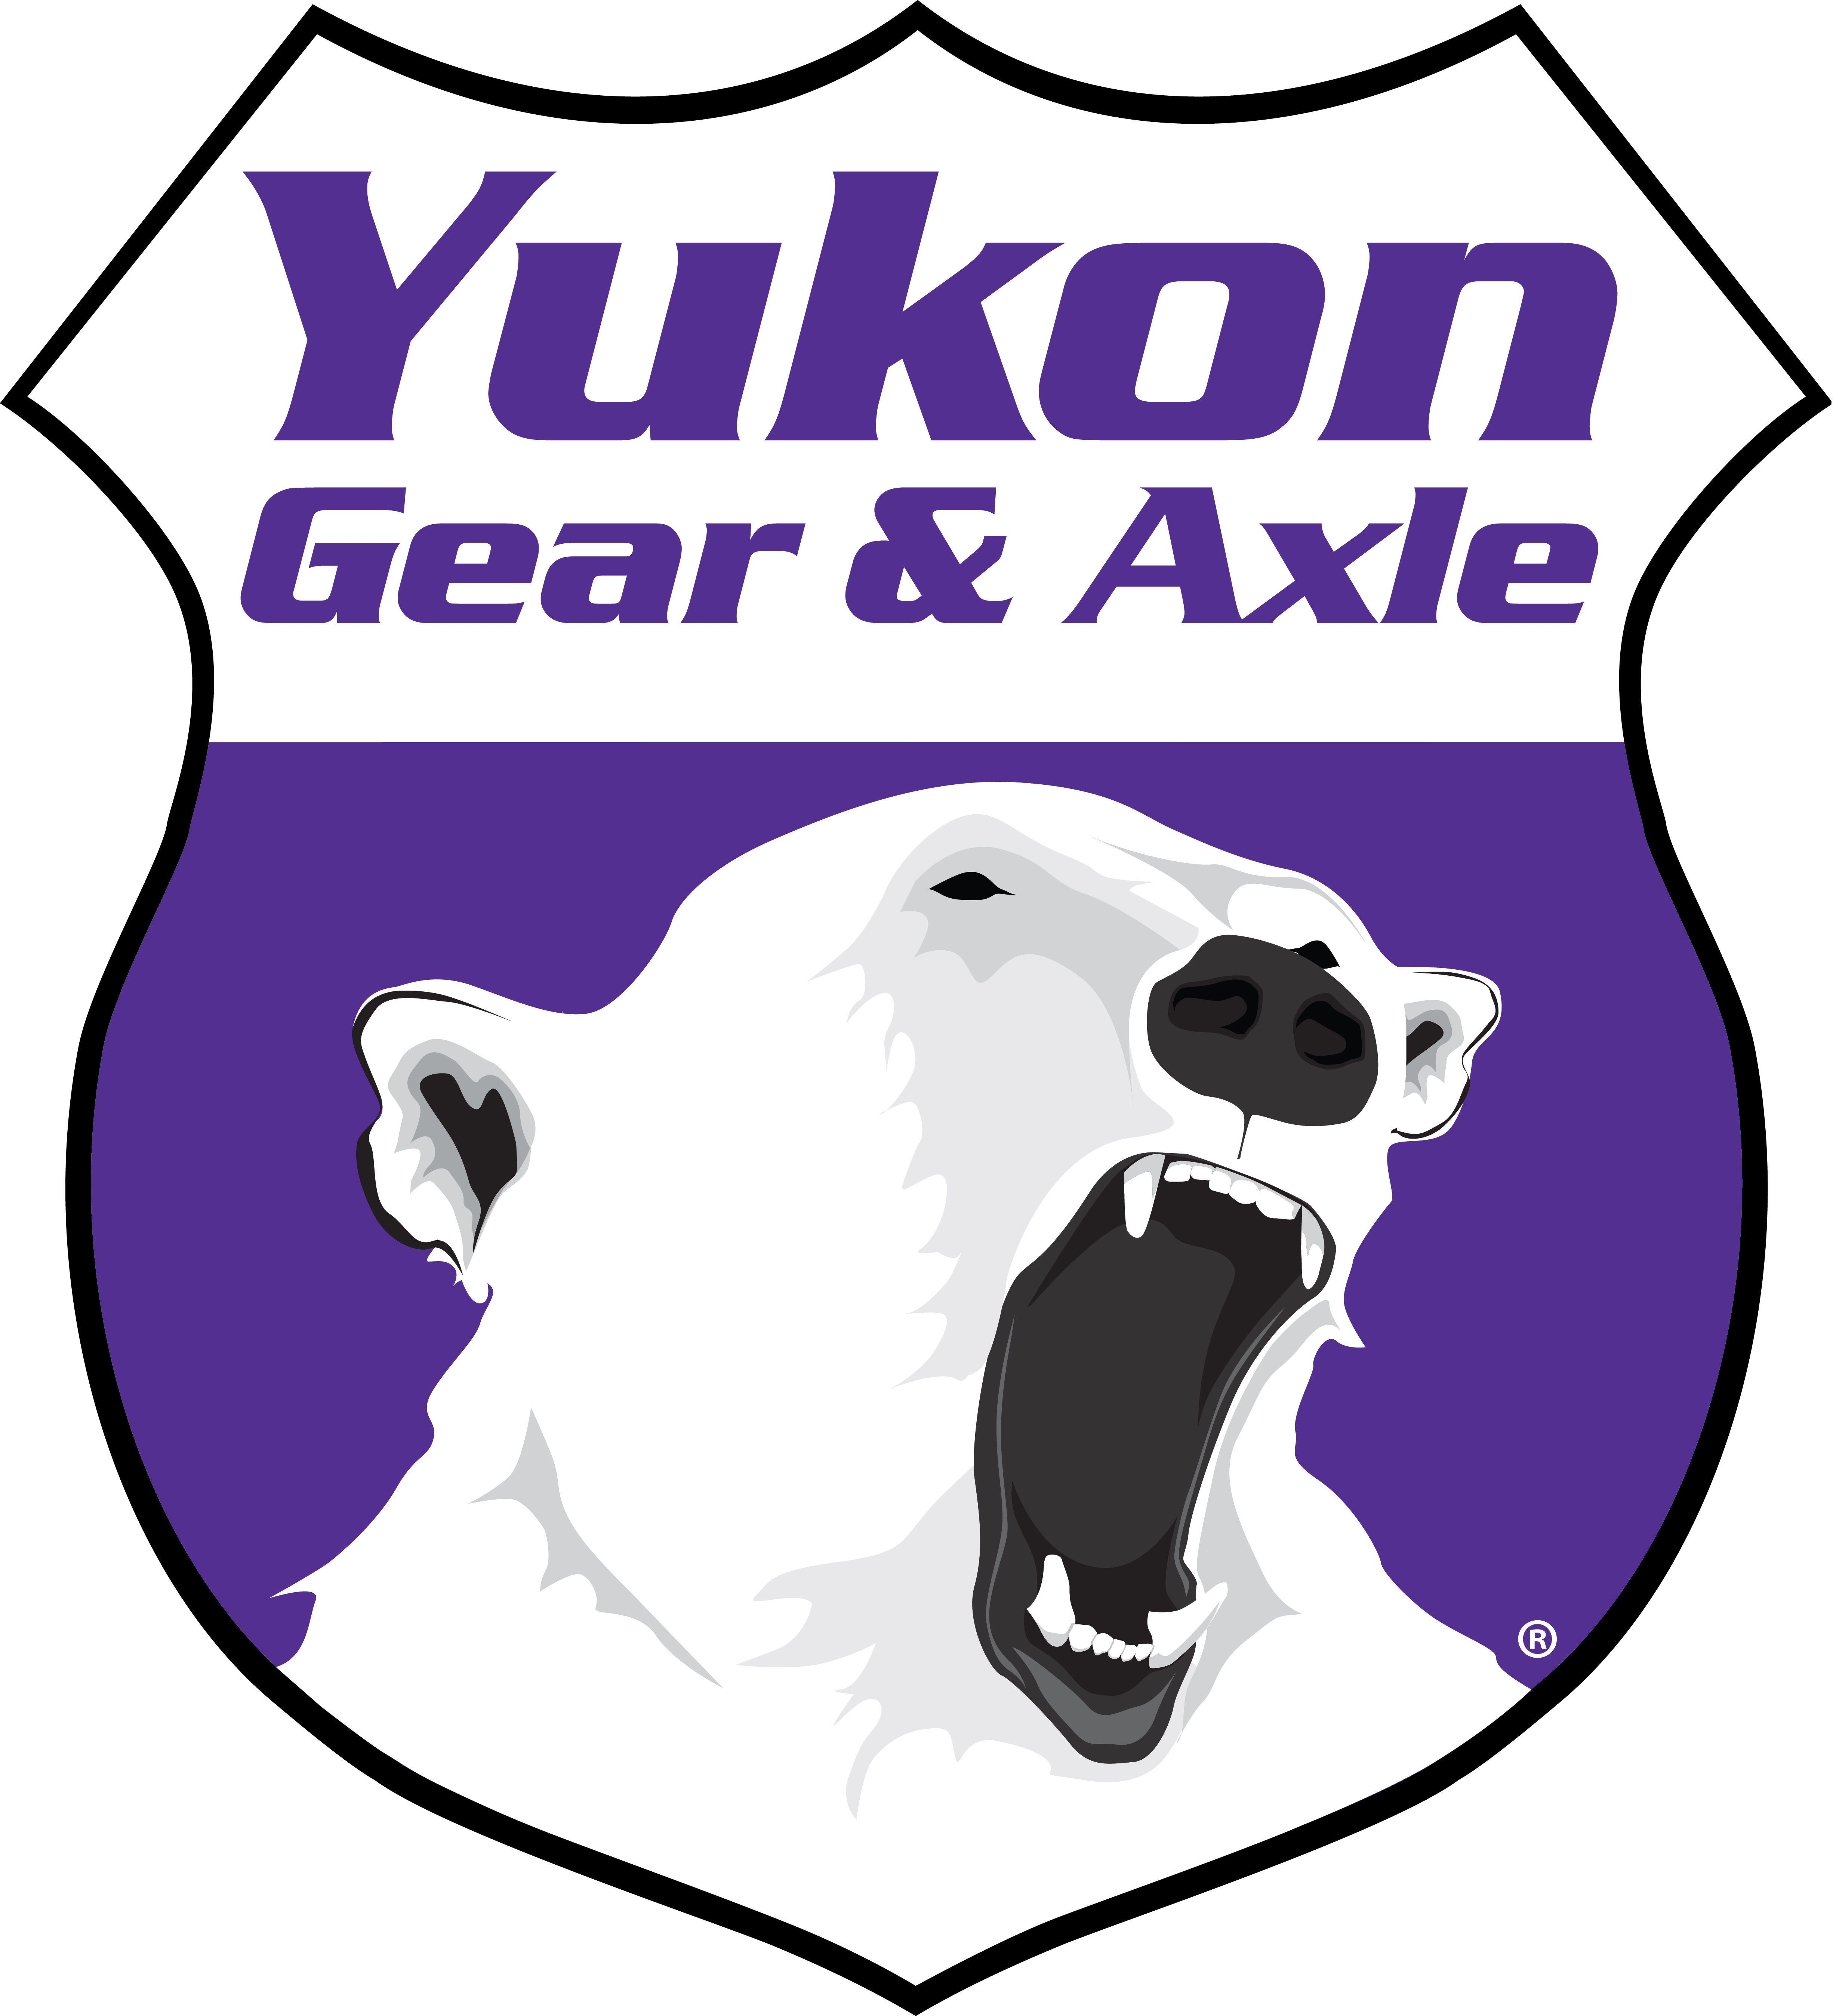 Yukon ring & pinion set, Dana 44/220mm rear, JL Rubicon/Sahara, 4.56 ratio 